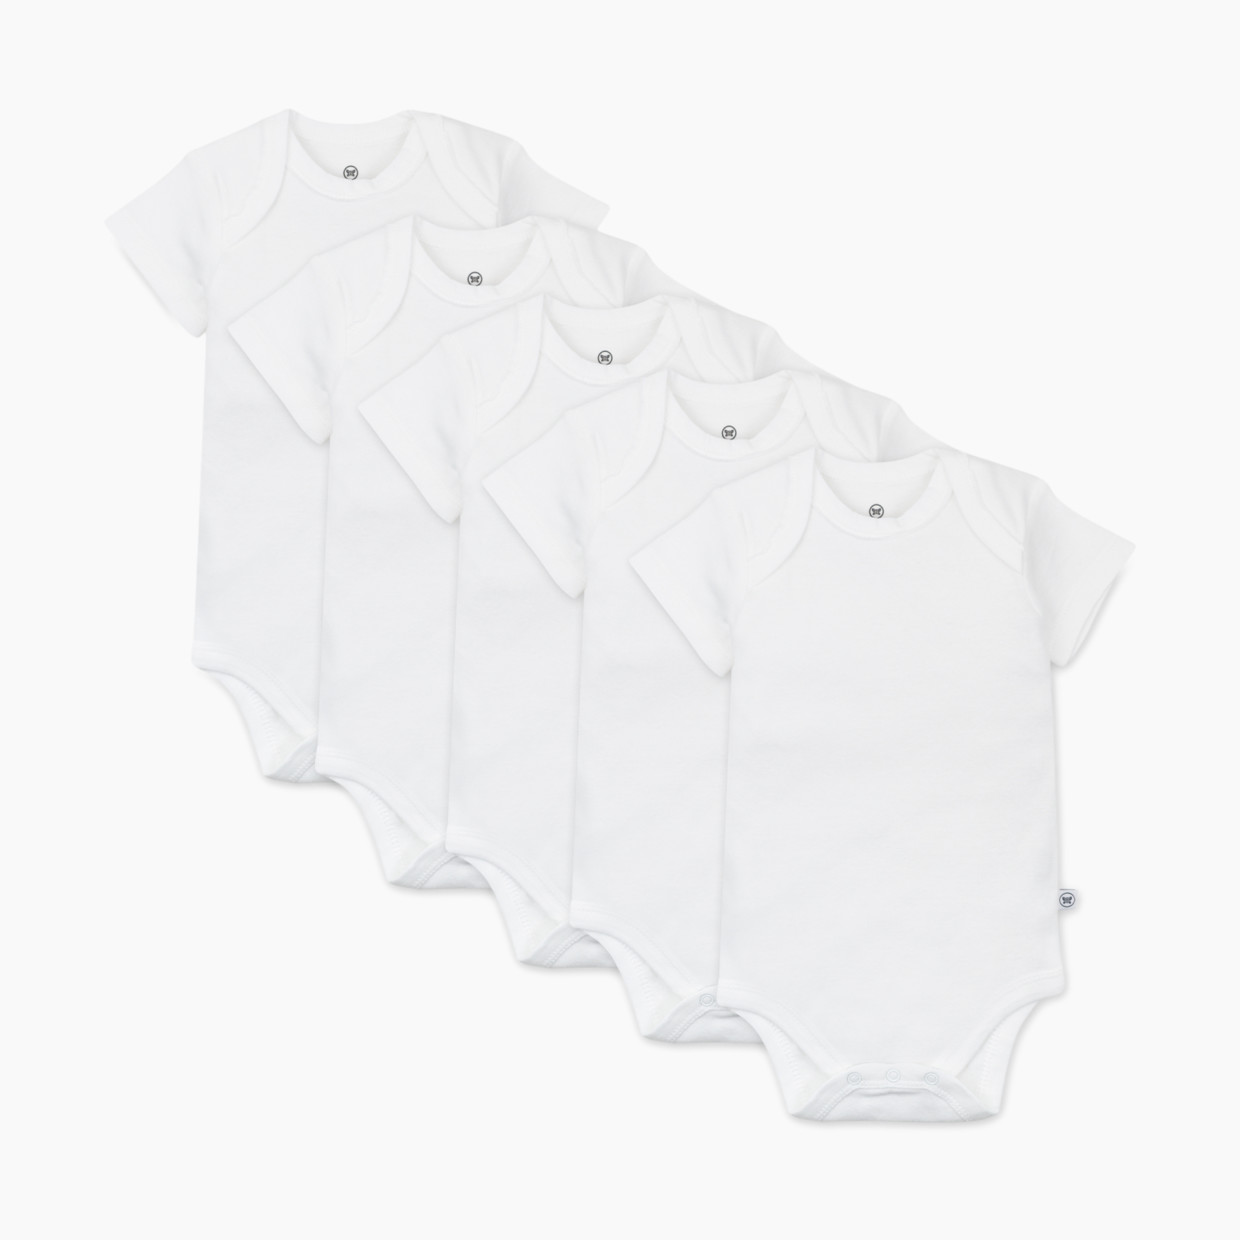 Honest Baby Clothing 5-Pack Organic Cotton Short Sleeve Bodysuit - Bright White, 6-9 M, 5.